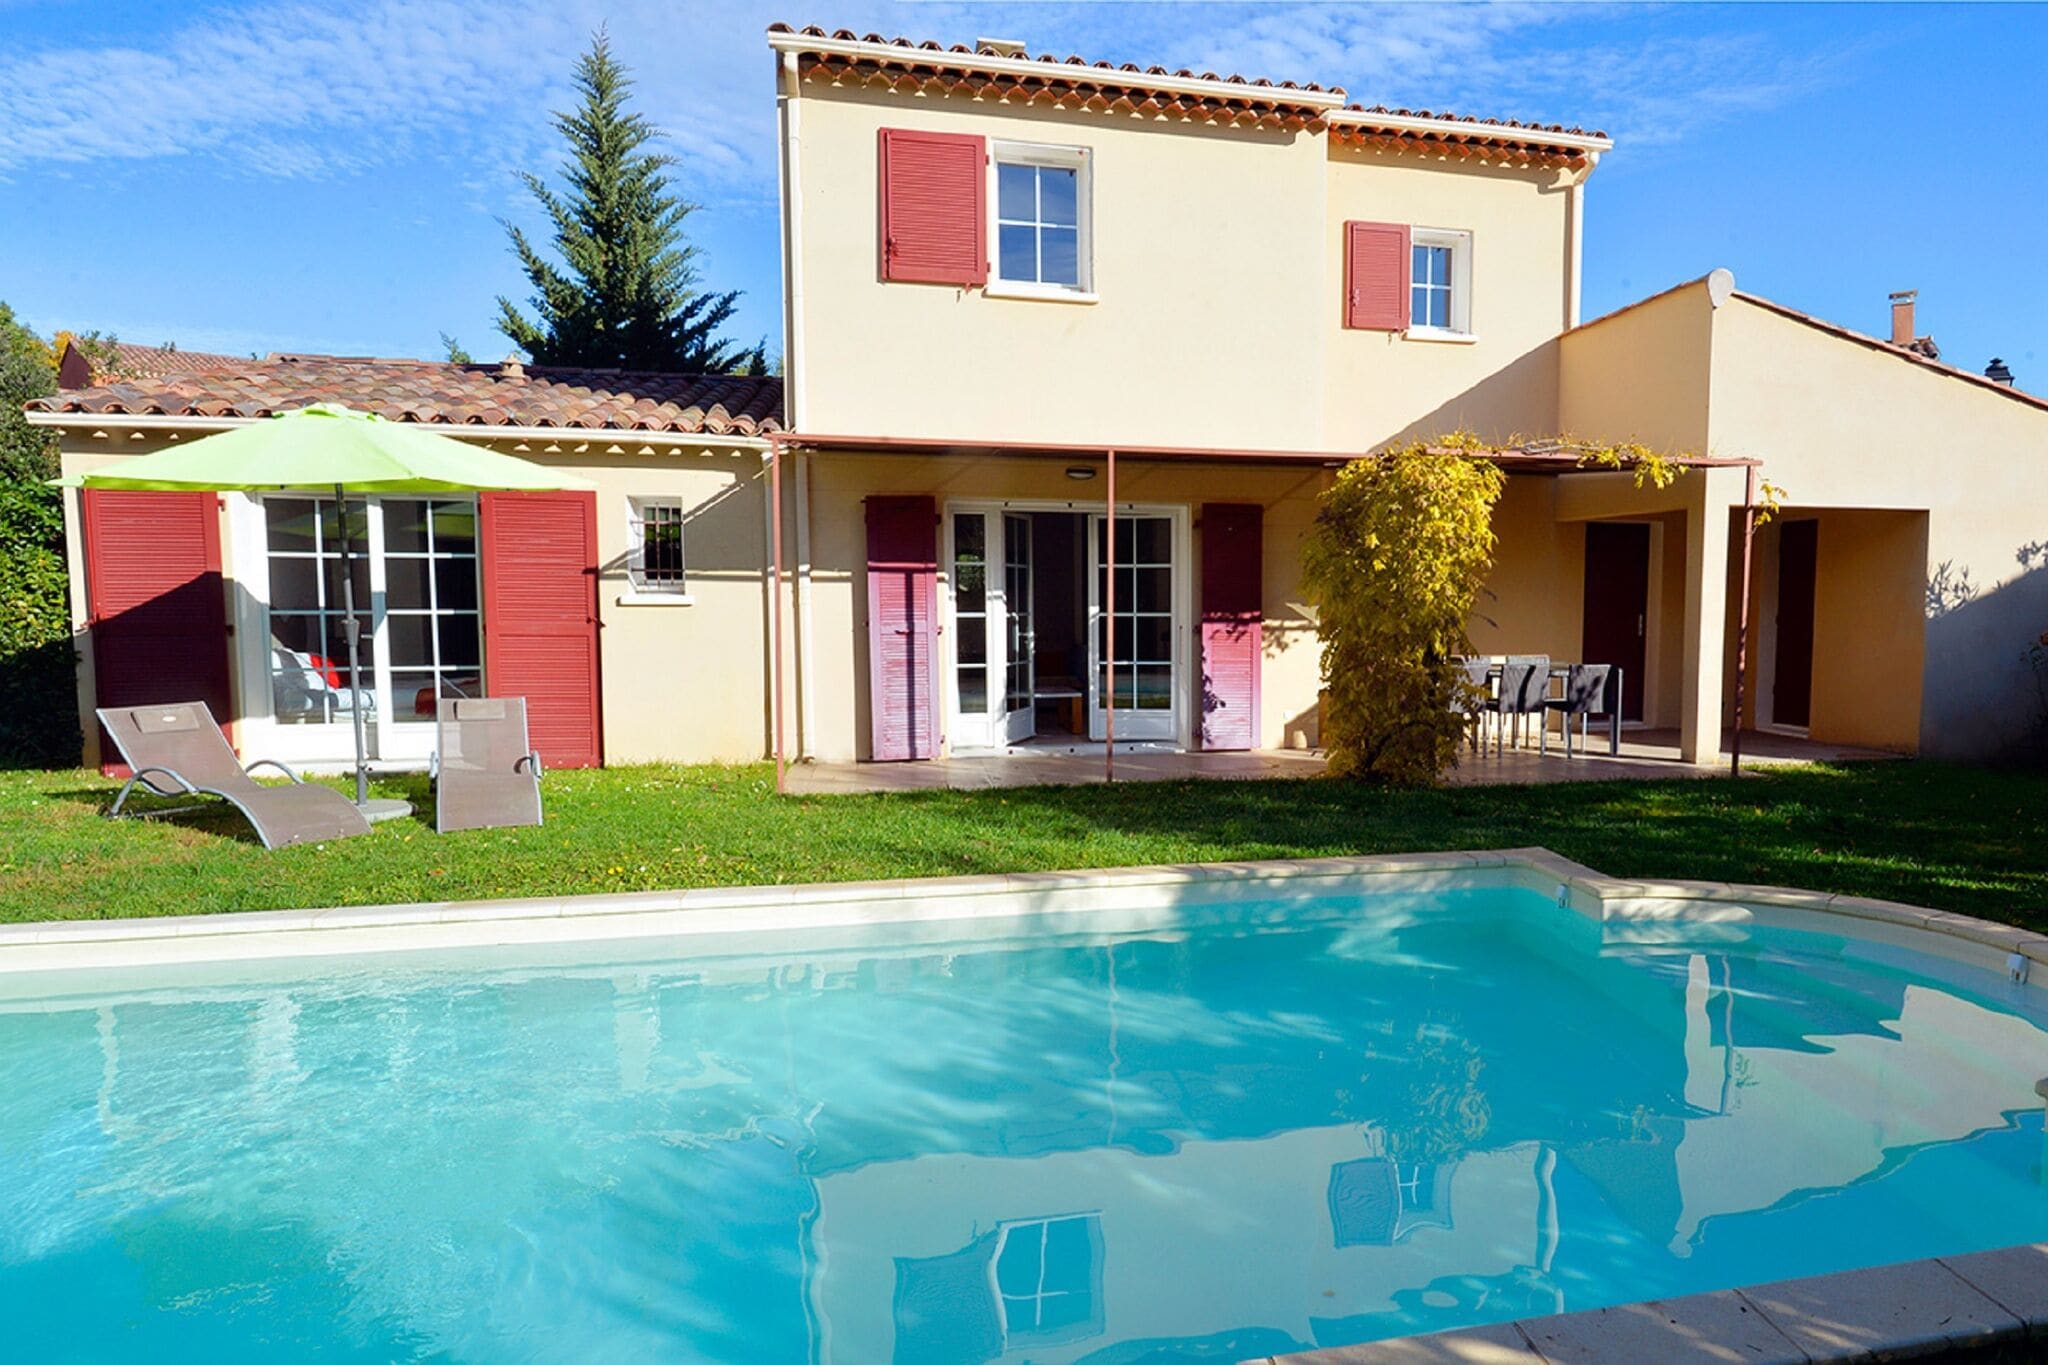 Luxury Provencal villa with AC, in charming Lubéron region